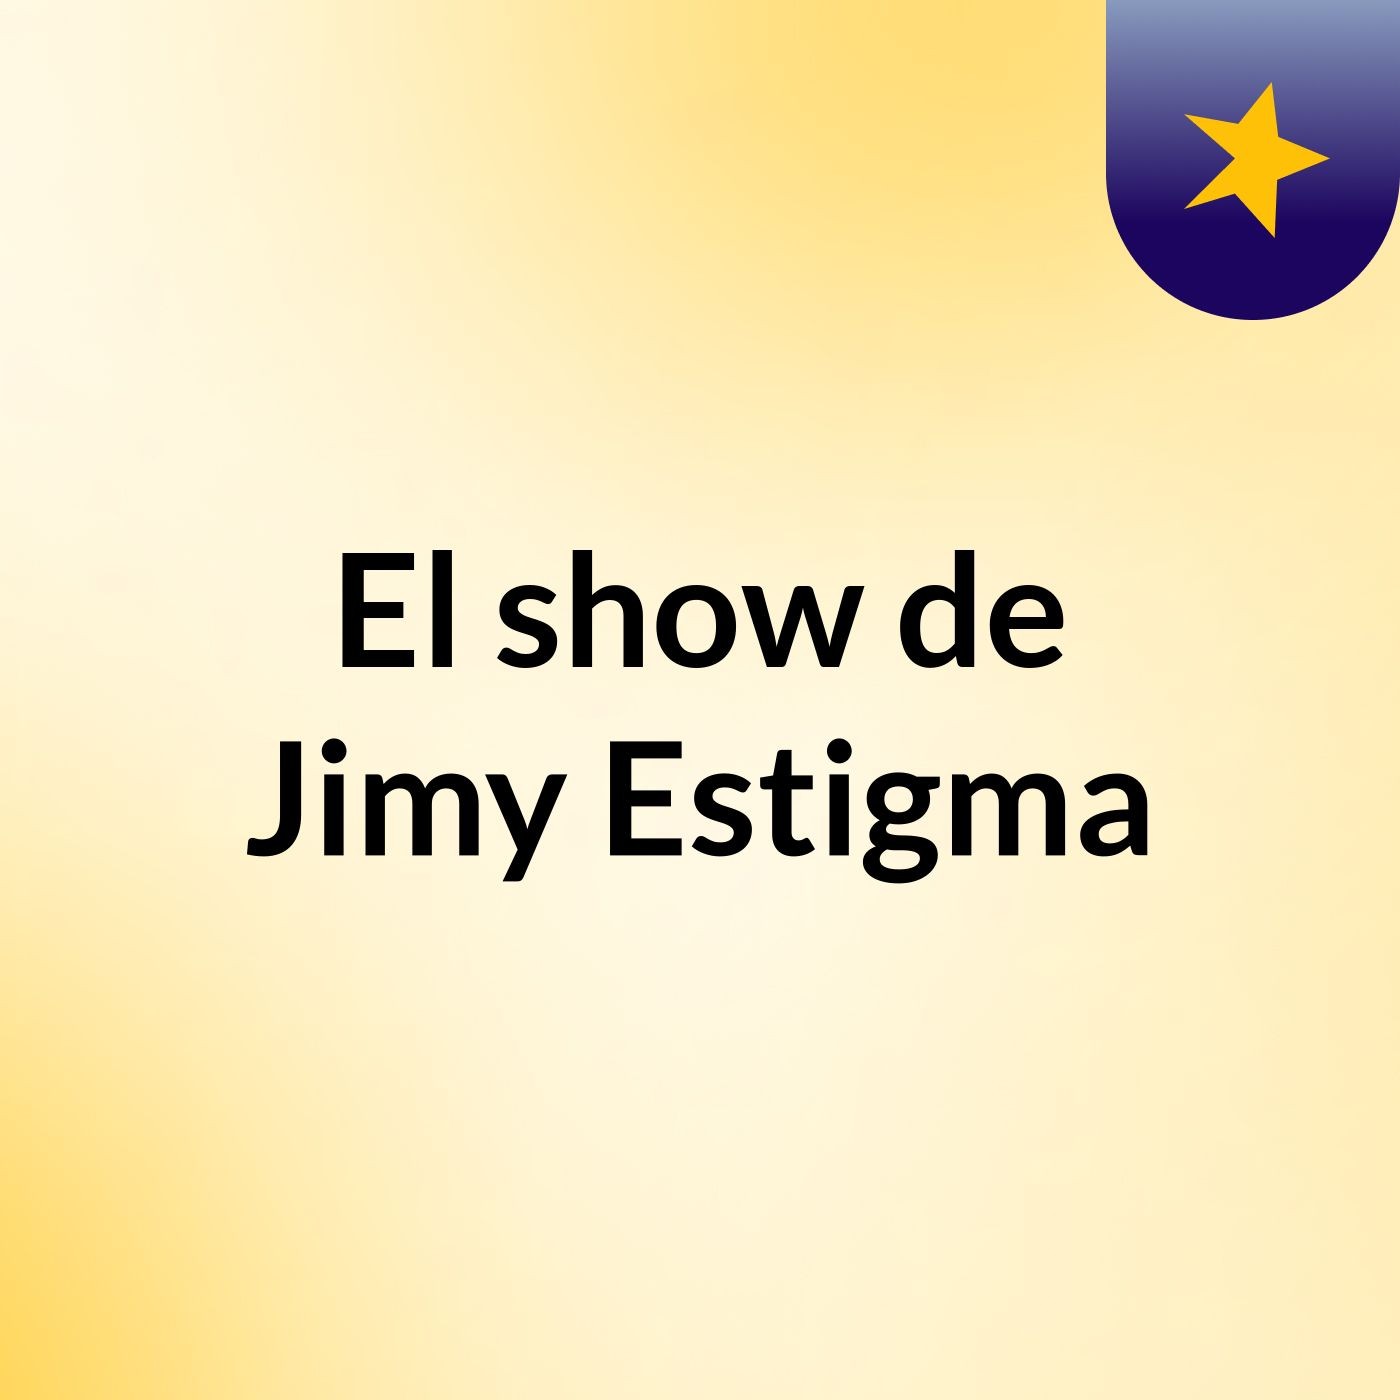 El show de Jimy Estigma